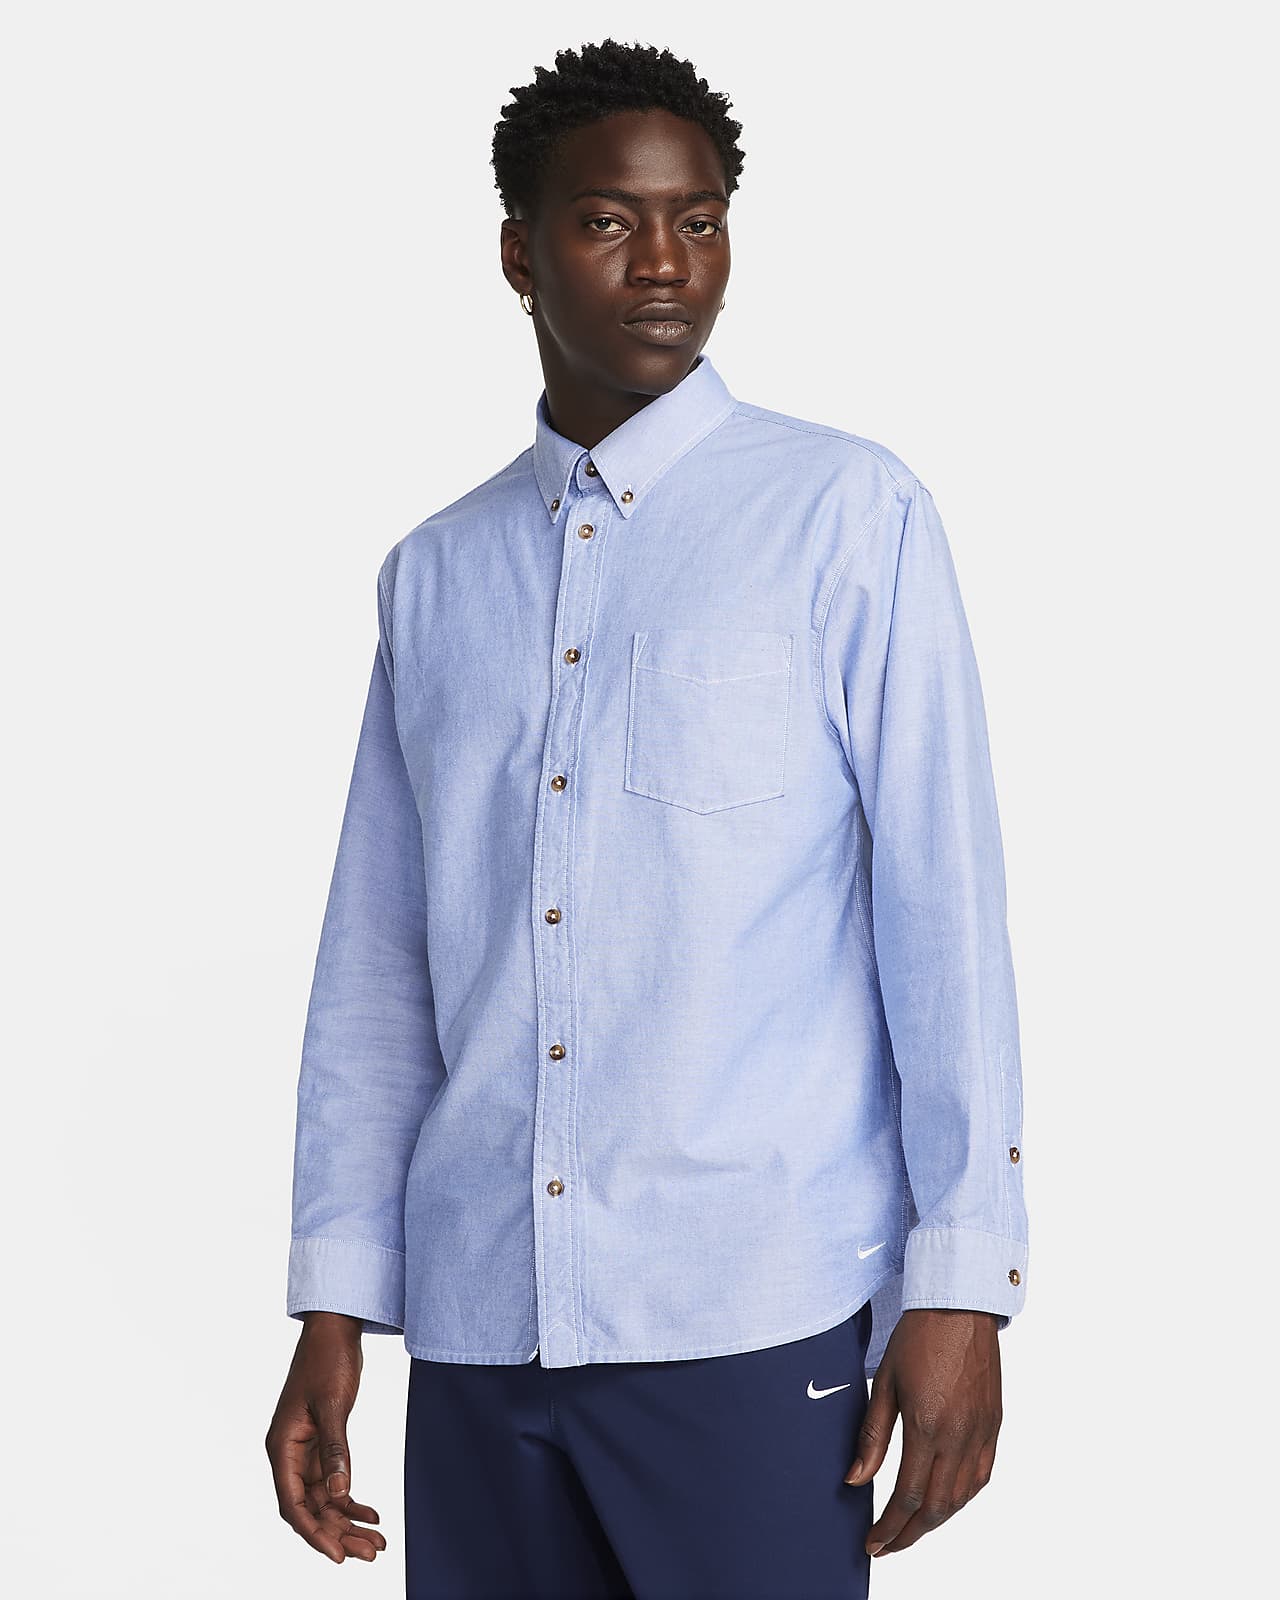 Nike Life Men\'s Long-Sleeve Oxford Button-Down Shirt.